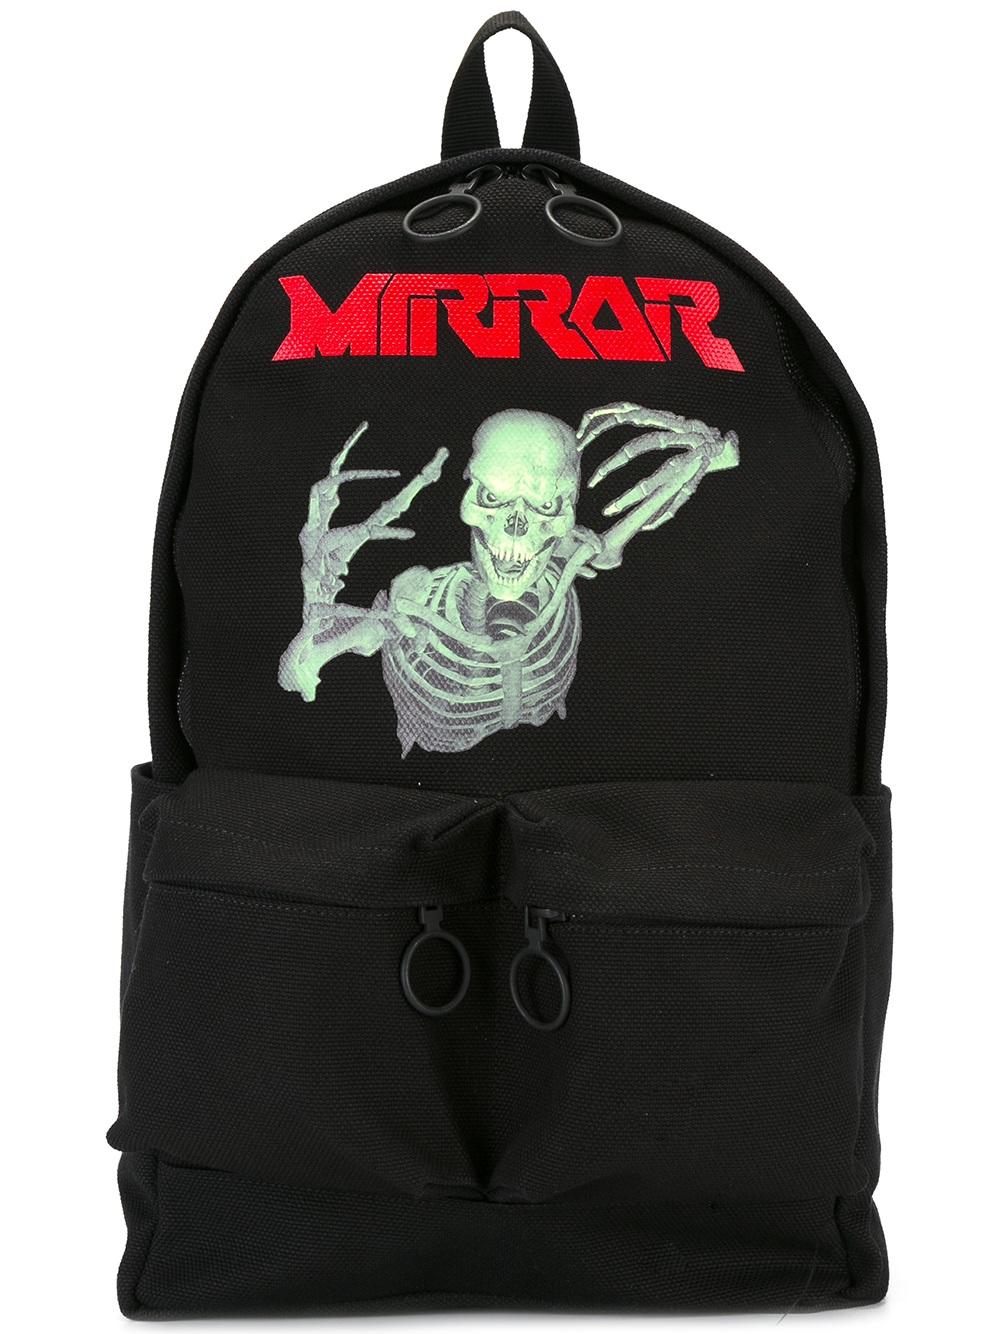 Off-White 'Mirror' backpack black multicolor Men Bags Backpacks